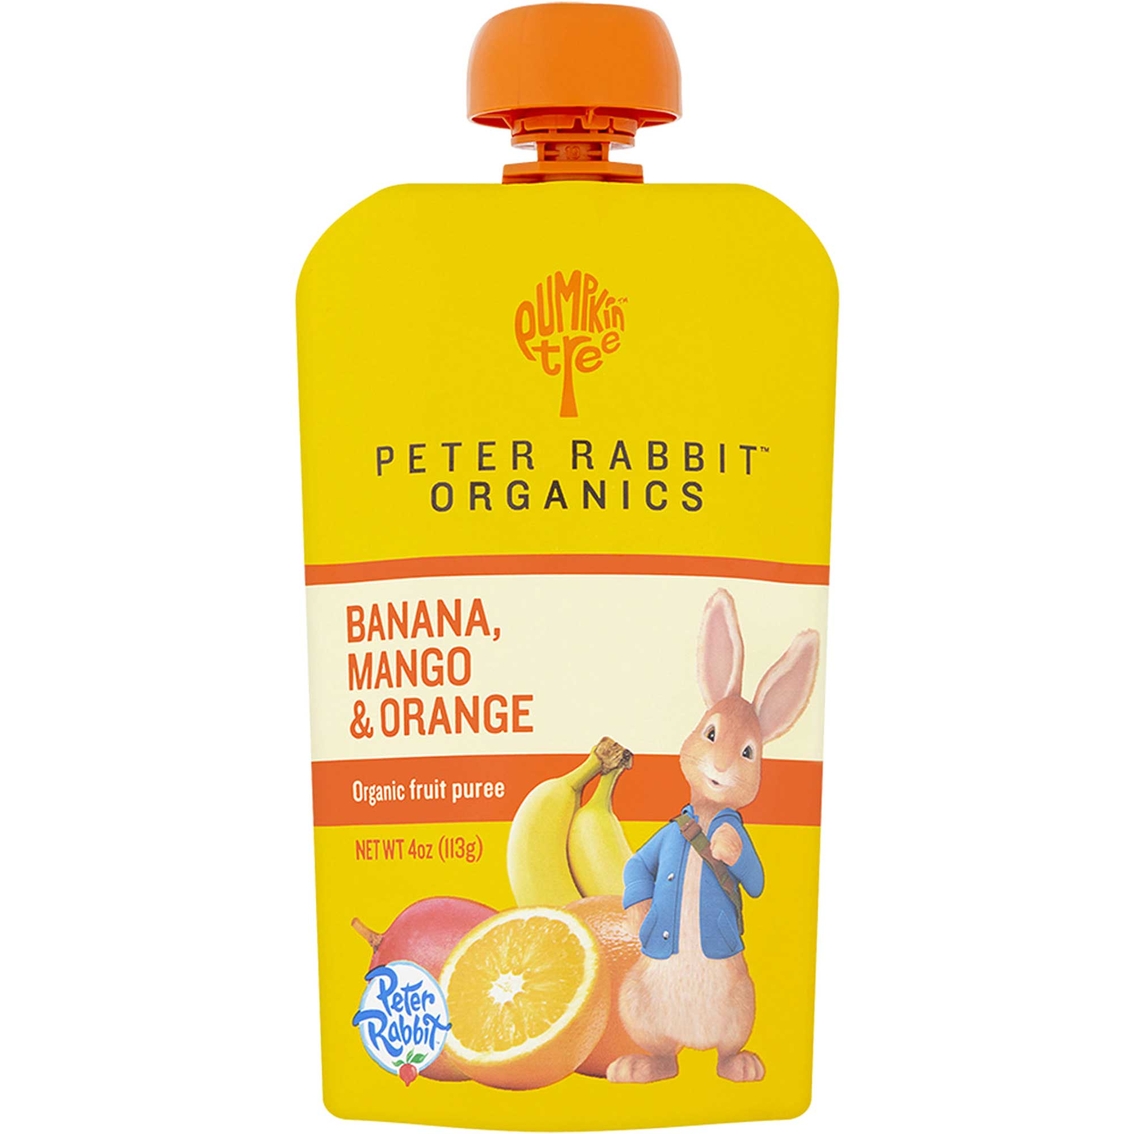 Peter Rabbit Organics 4 oz. Banana Mango and Orange Fruit Snack Pouch